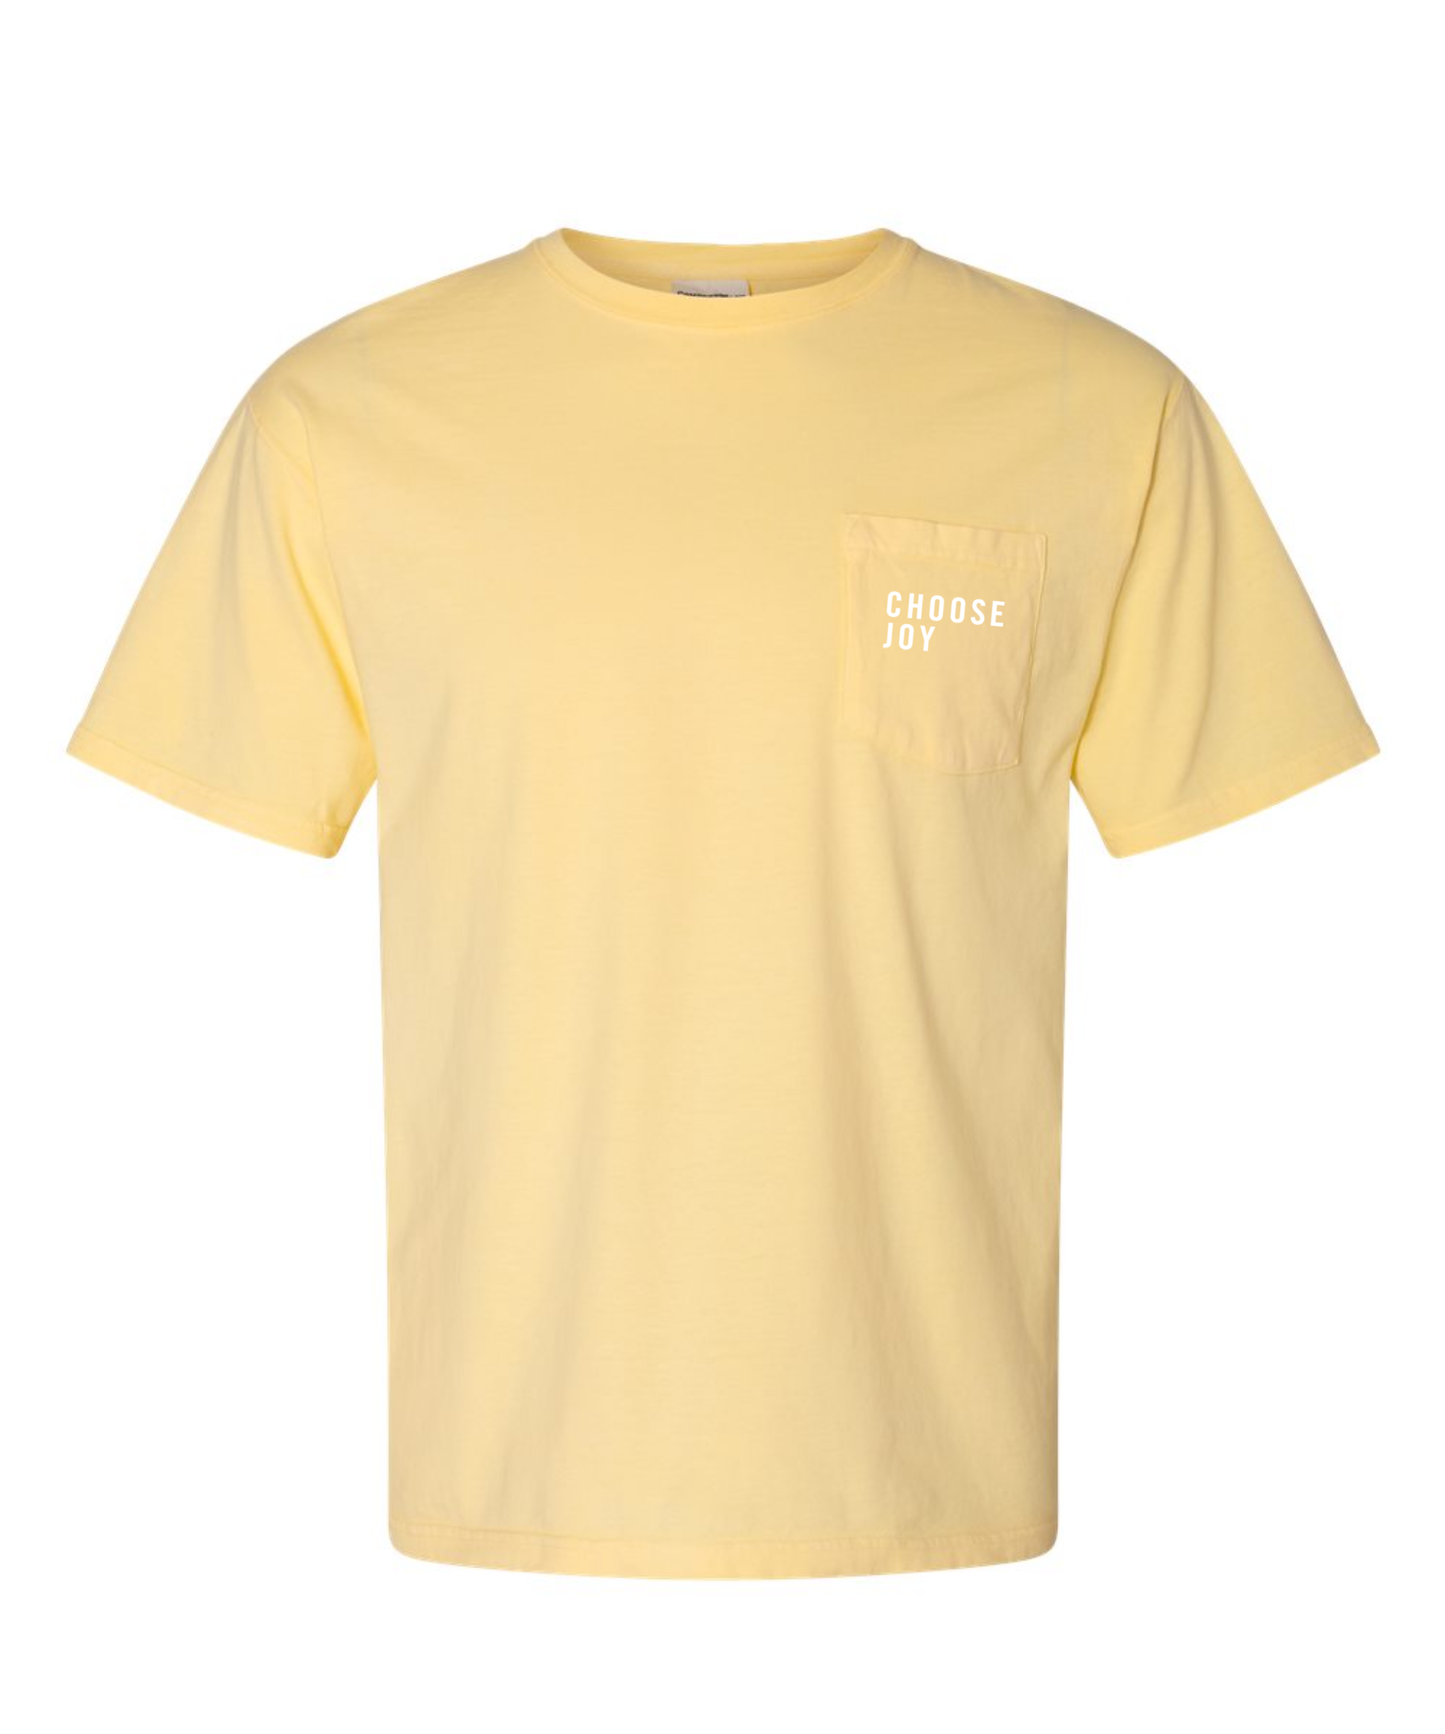 Hearts of Joy International Pocket T-Shirt/ Yellow